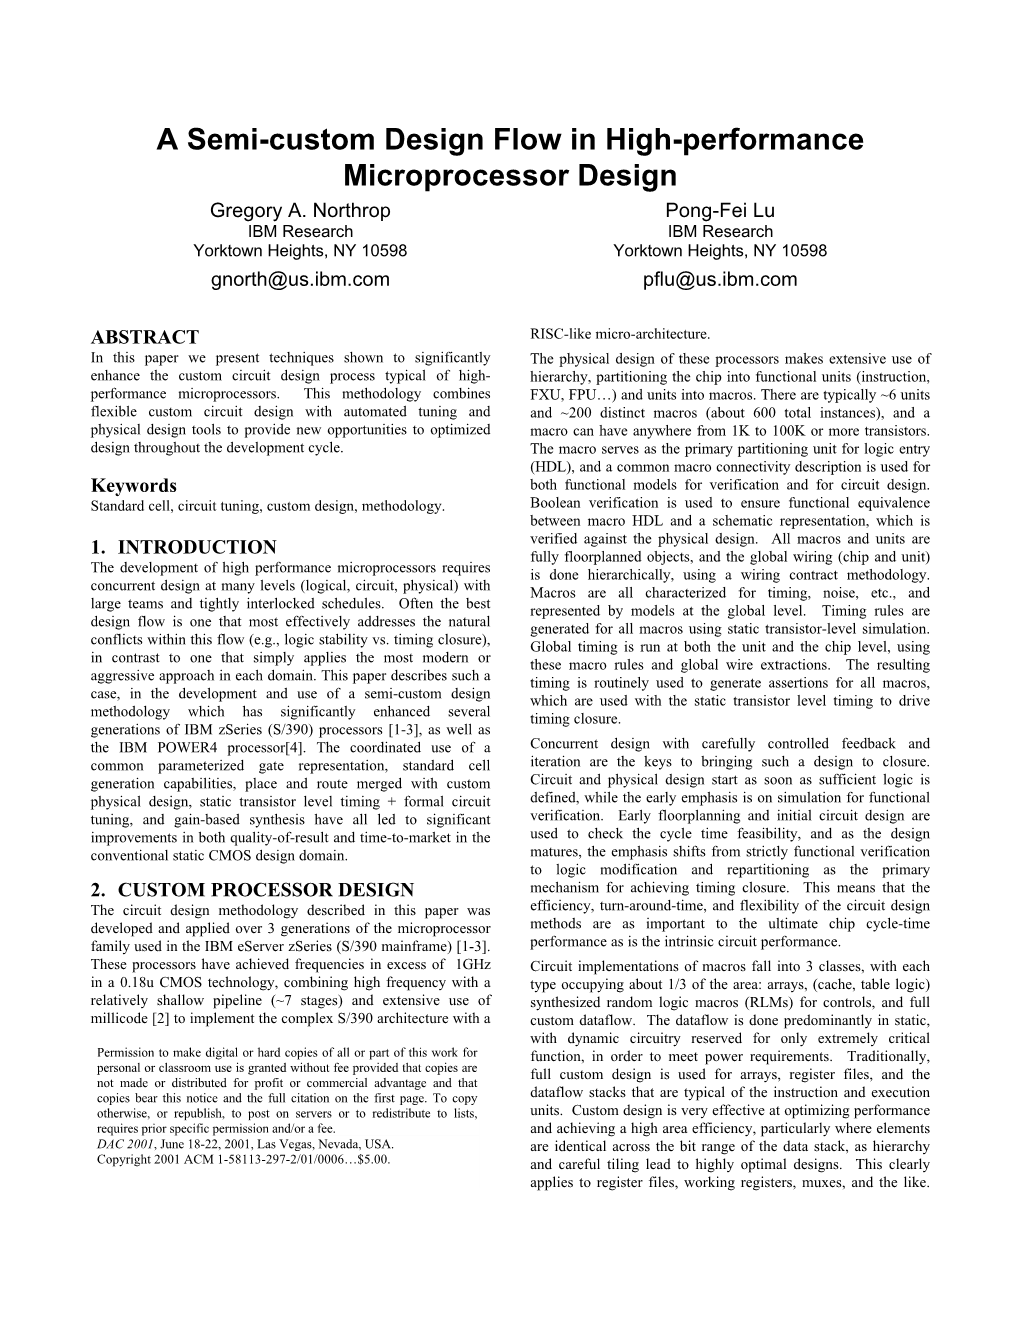 A Semi-Custom Design Flow in High-Performance Microprocessor Design Gregory A